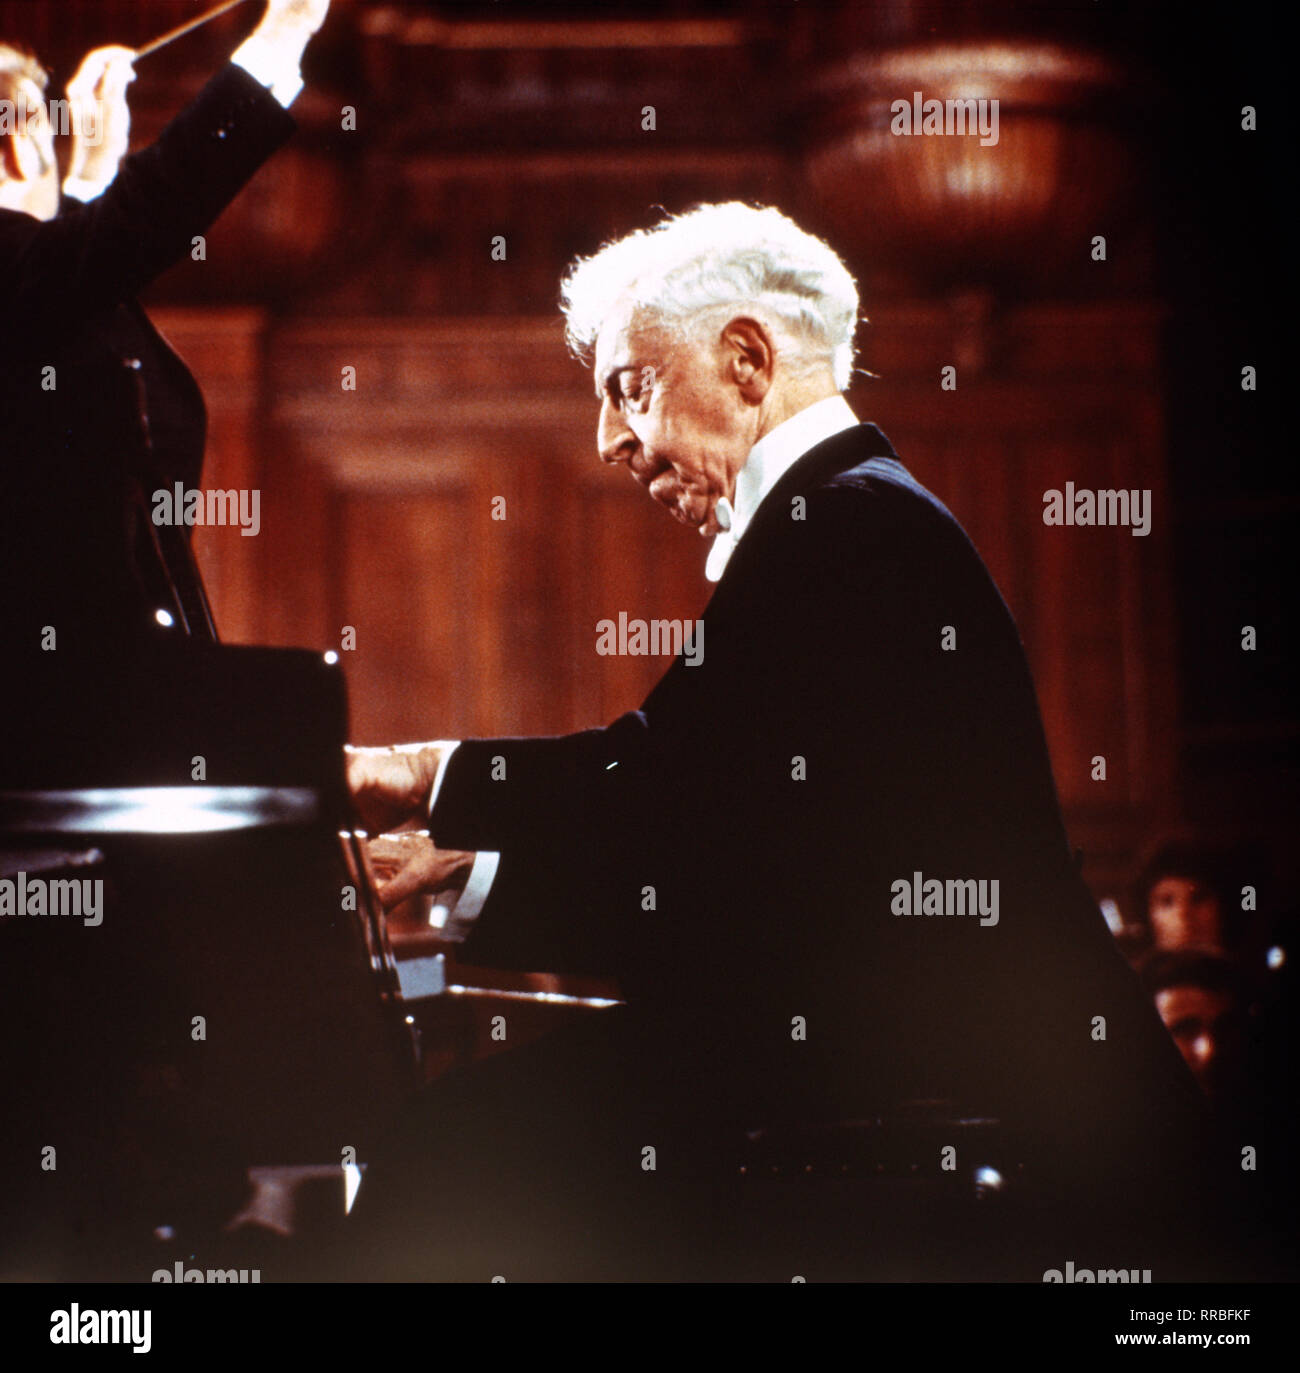 Arthur Rubinstein (pianist)